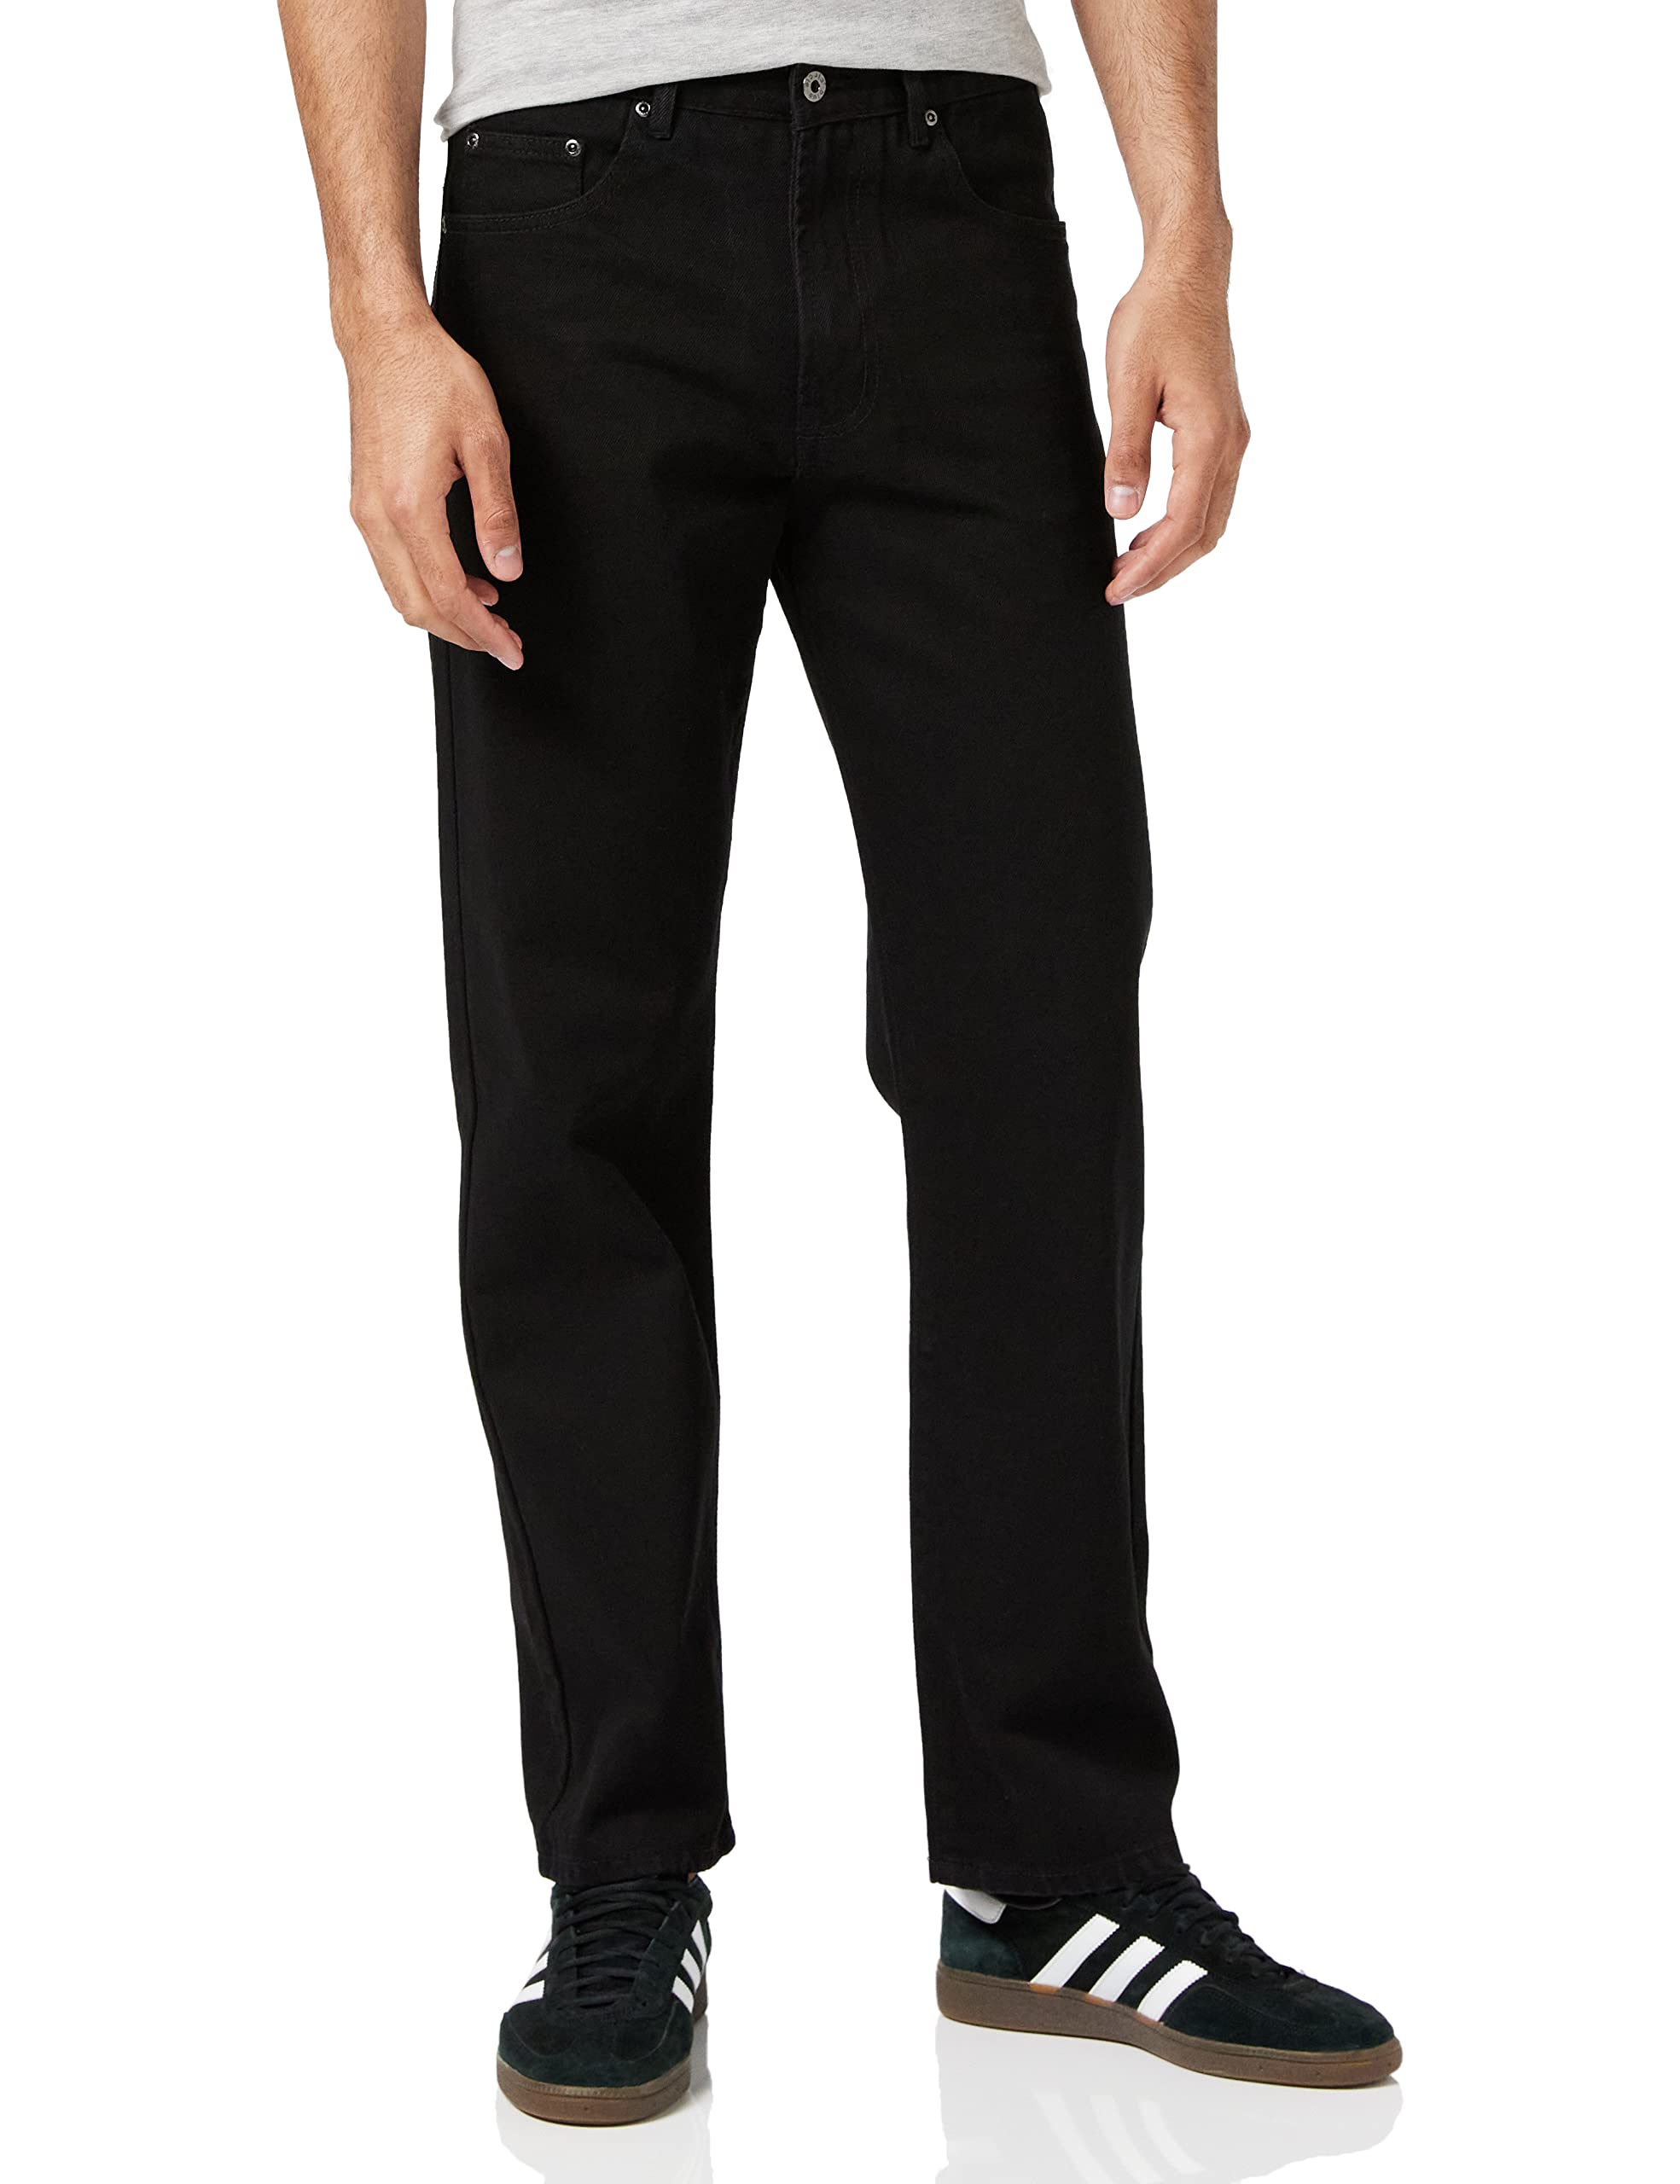 Enzo Herren Straight Jeans BCB5, Schwarz (Black), 40XS